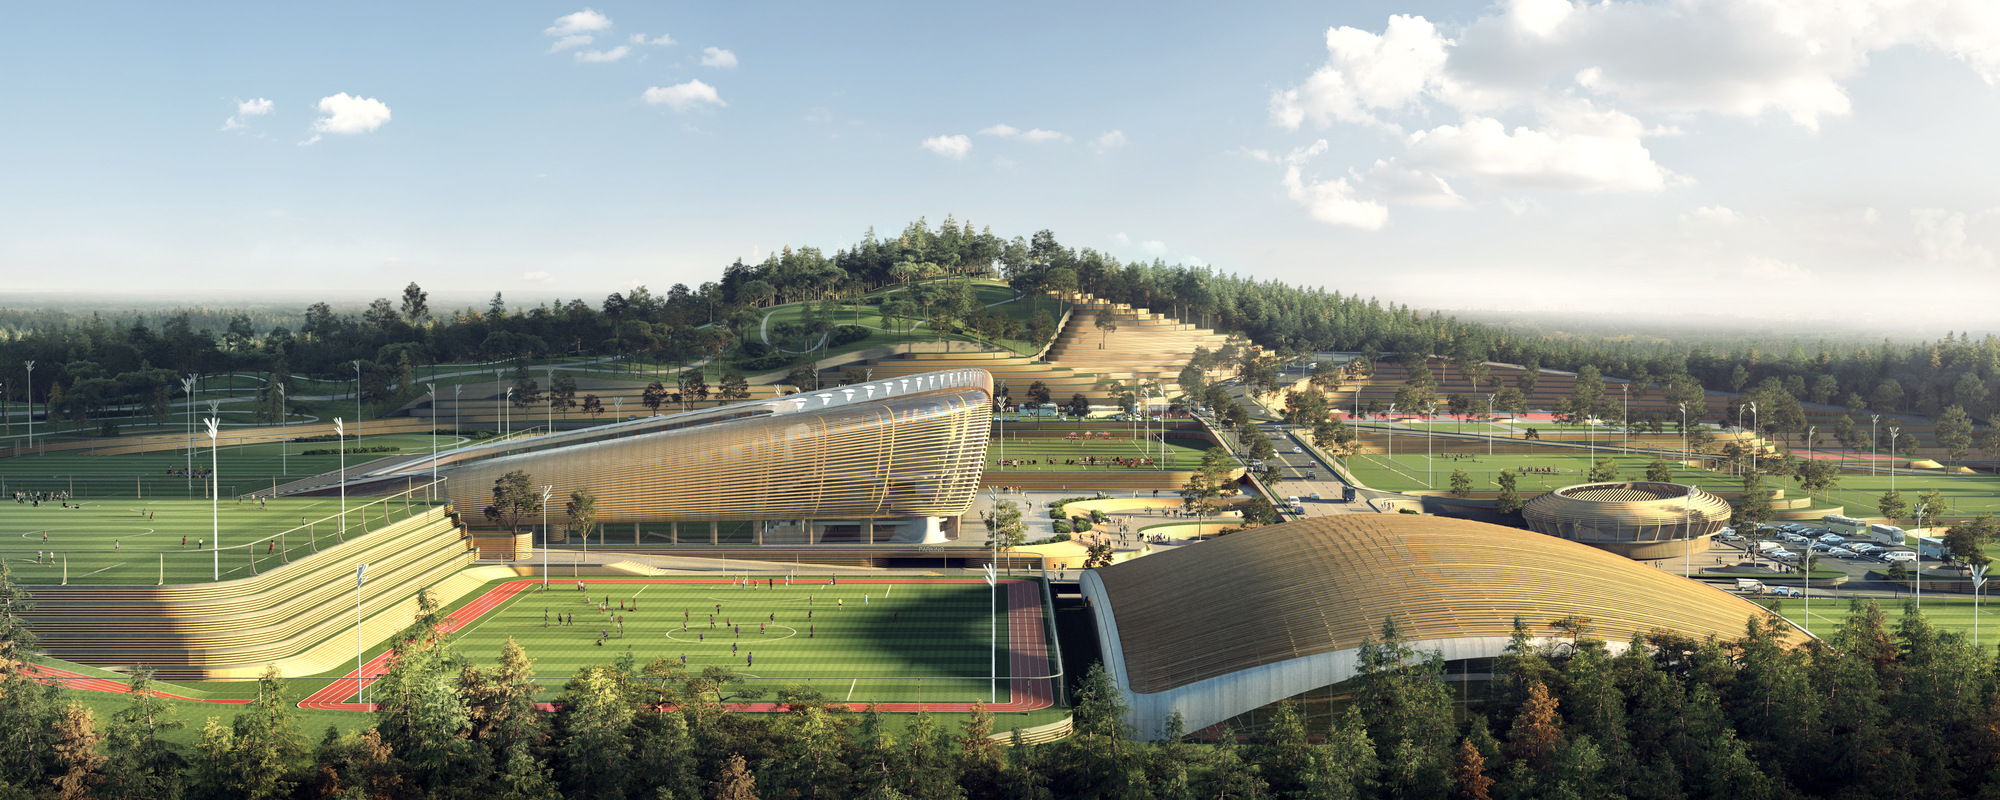 Korean Football Gets a New Home, Designed by UNStudio